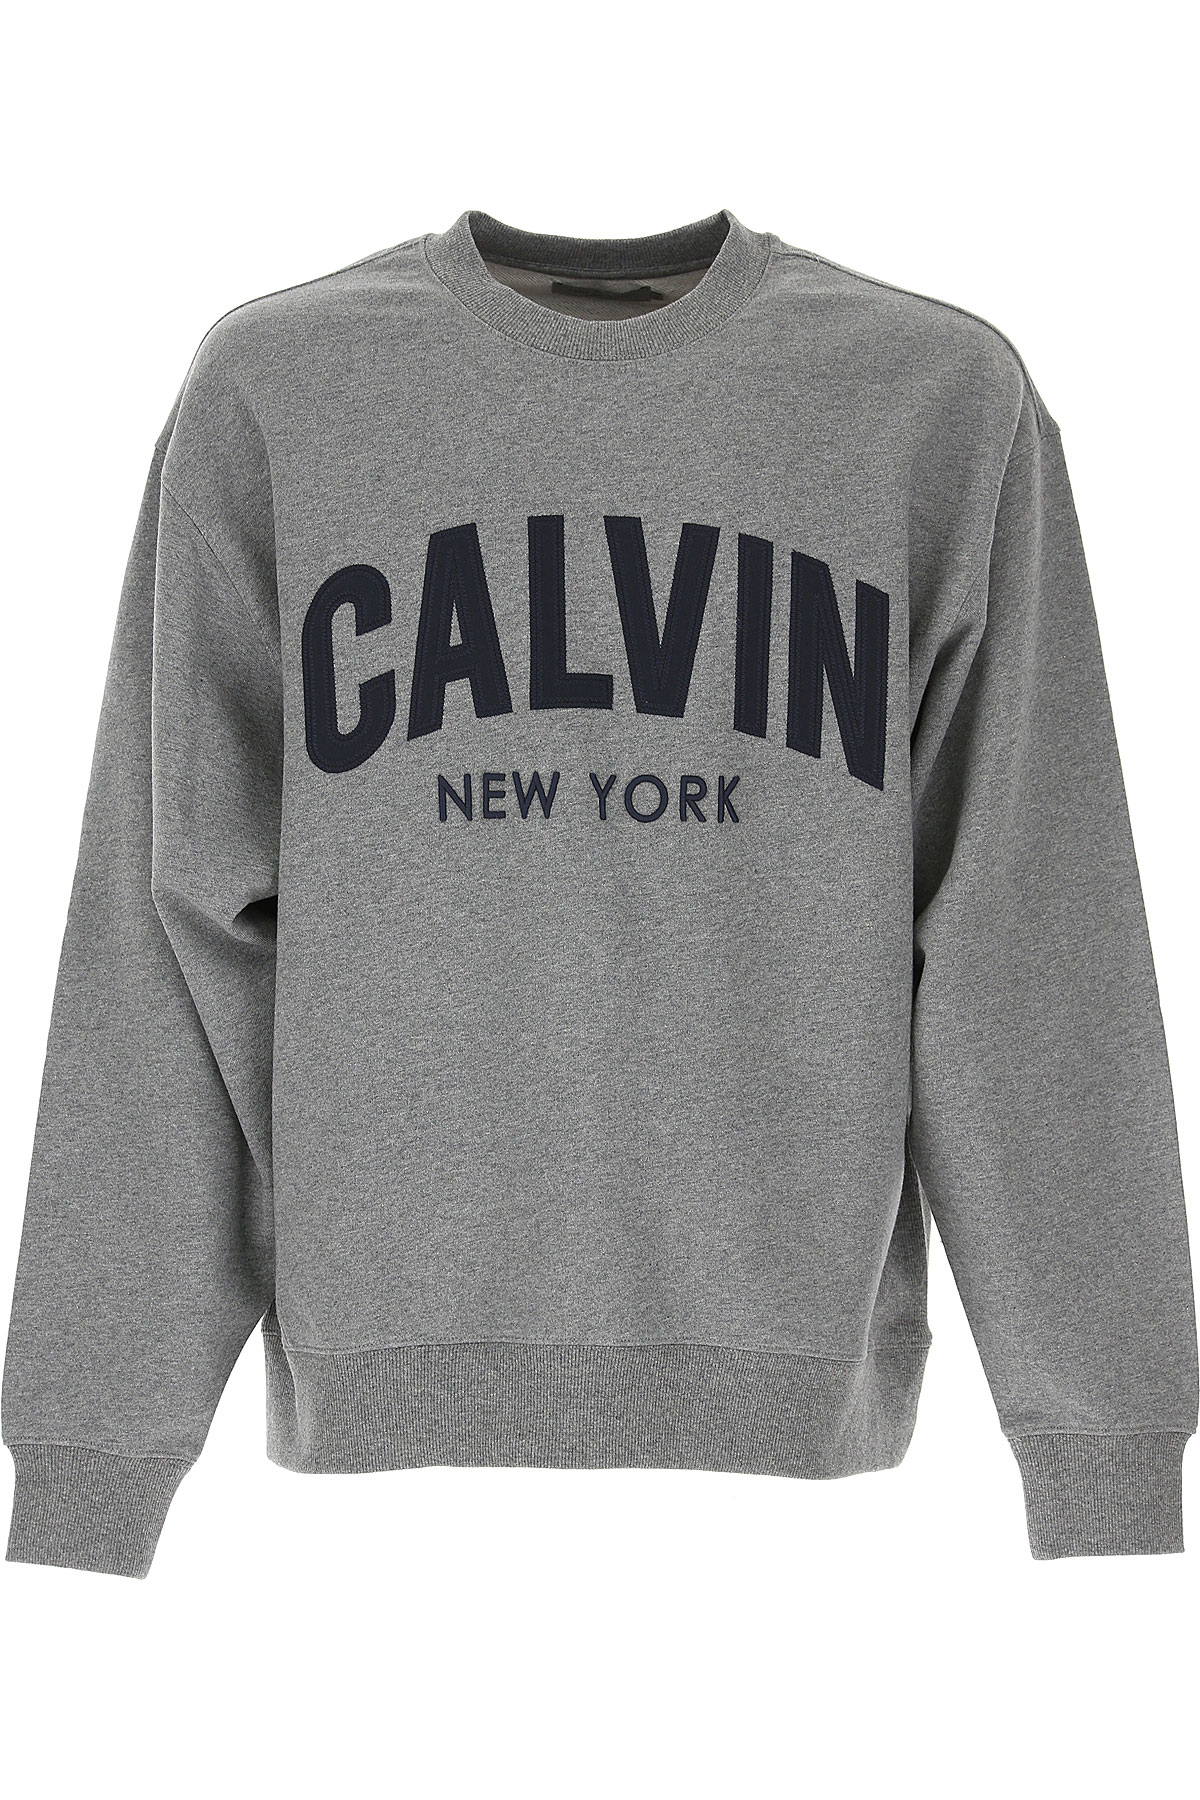 Mens Clothing Calvin Klein, Style code: j30j30698-025-